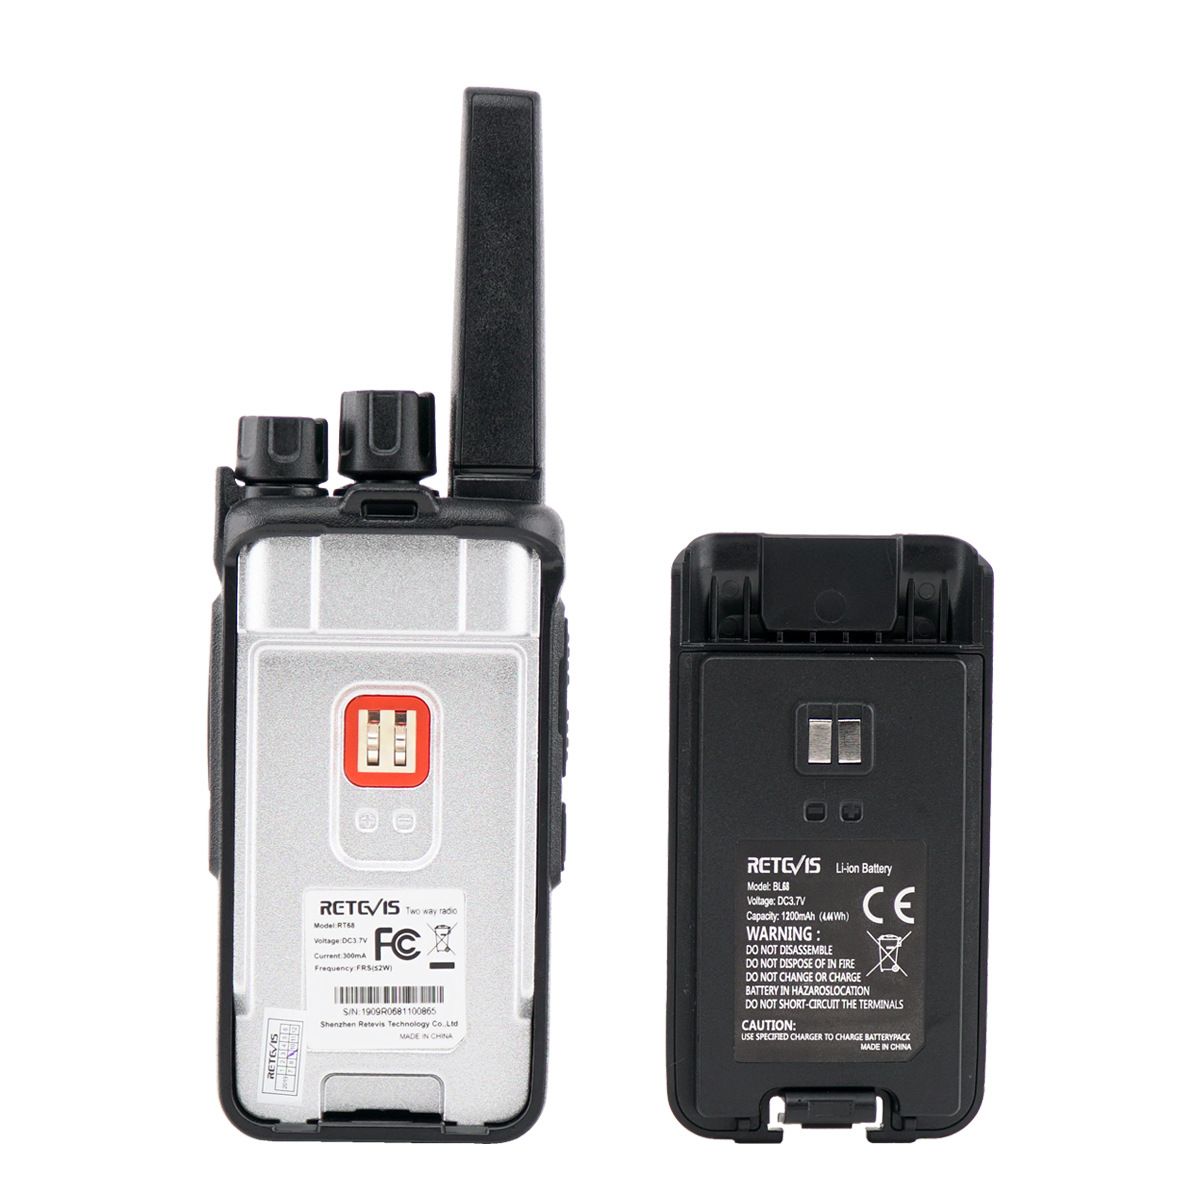 2PCS-Retevis-RT68-16-Channels-Frequency-462-MHz-Mini-Ultra-Light-Handheld-Radio-Walkie-Talkie-Interc-1643084